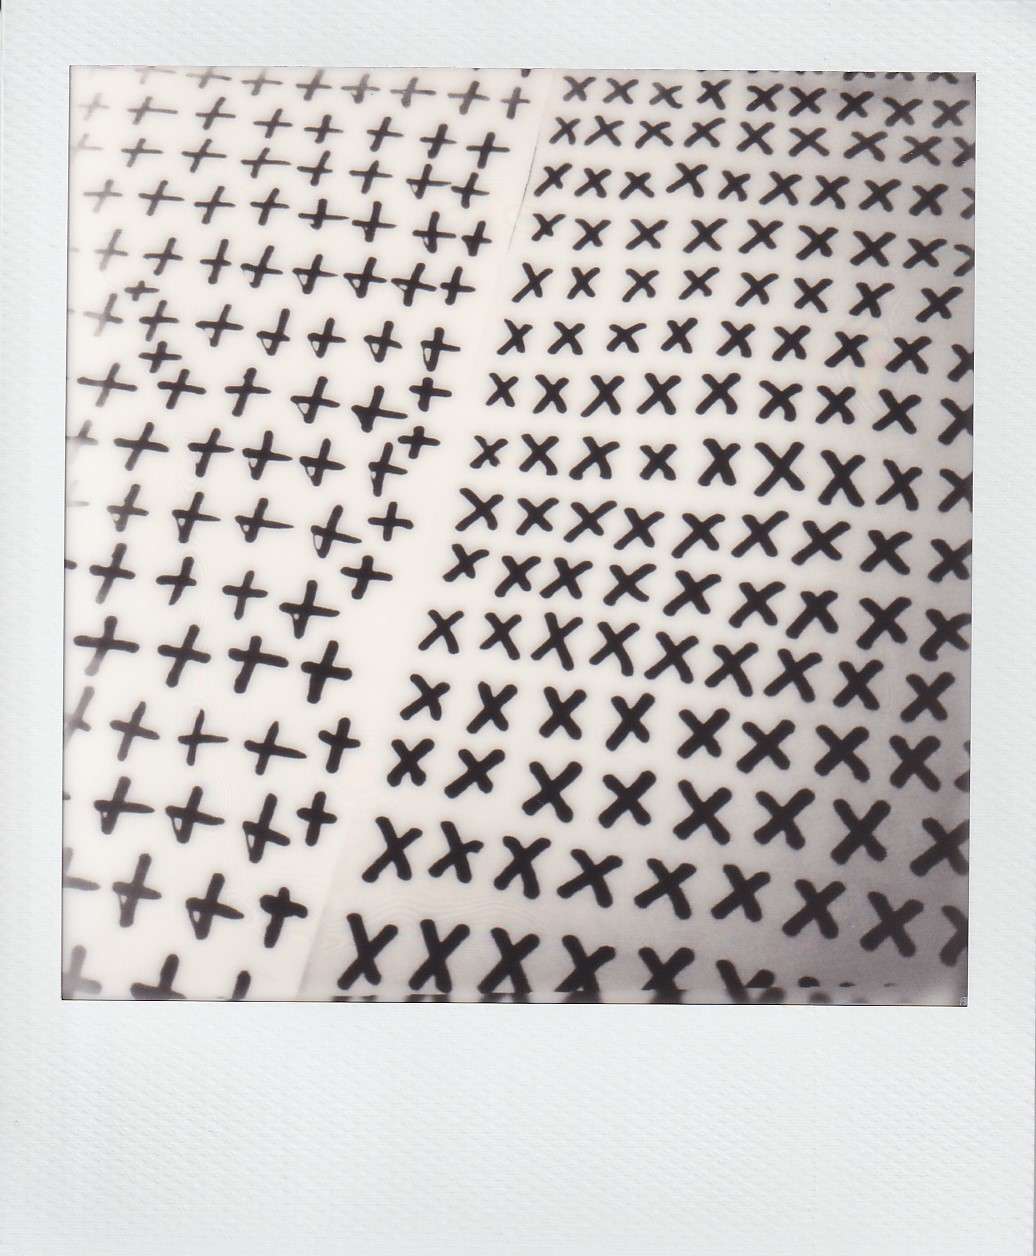 Polaroid photography by I'Nasah Crockett, plus signs and Xs drawn in rows using black marker